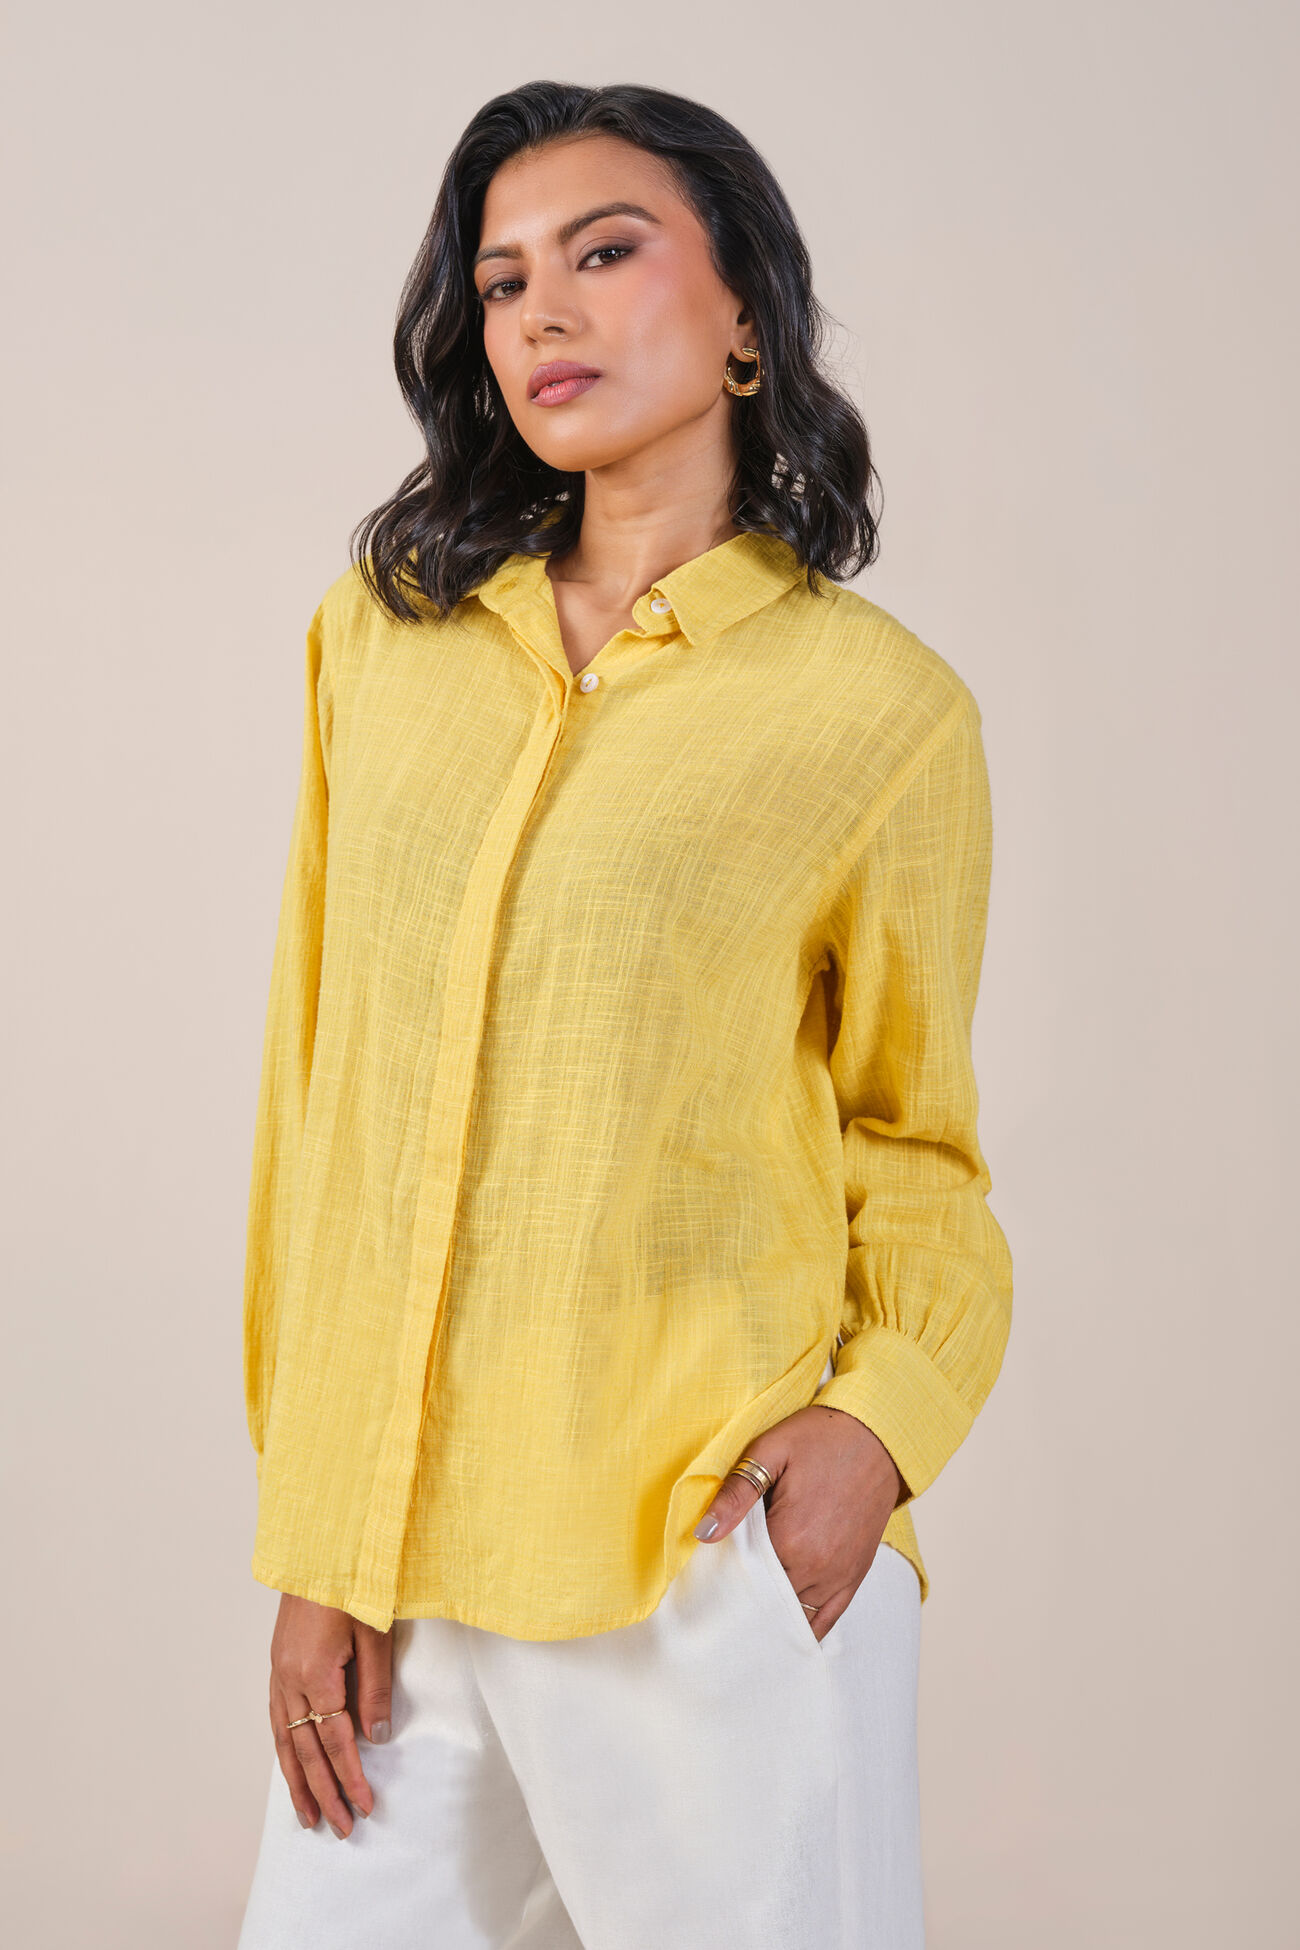 Magnolia Shirt, Yellow, image 3